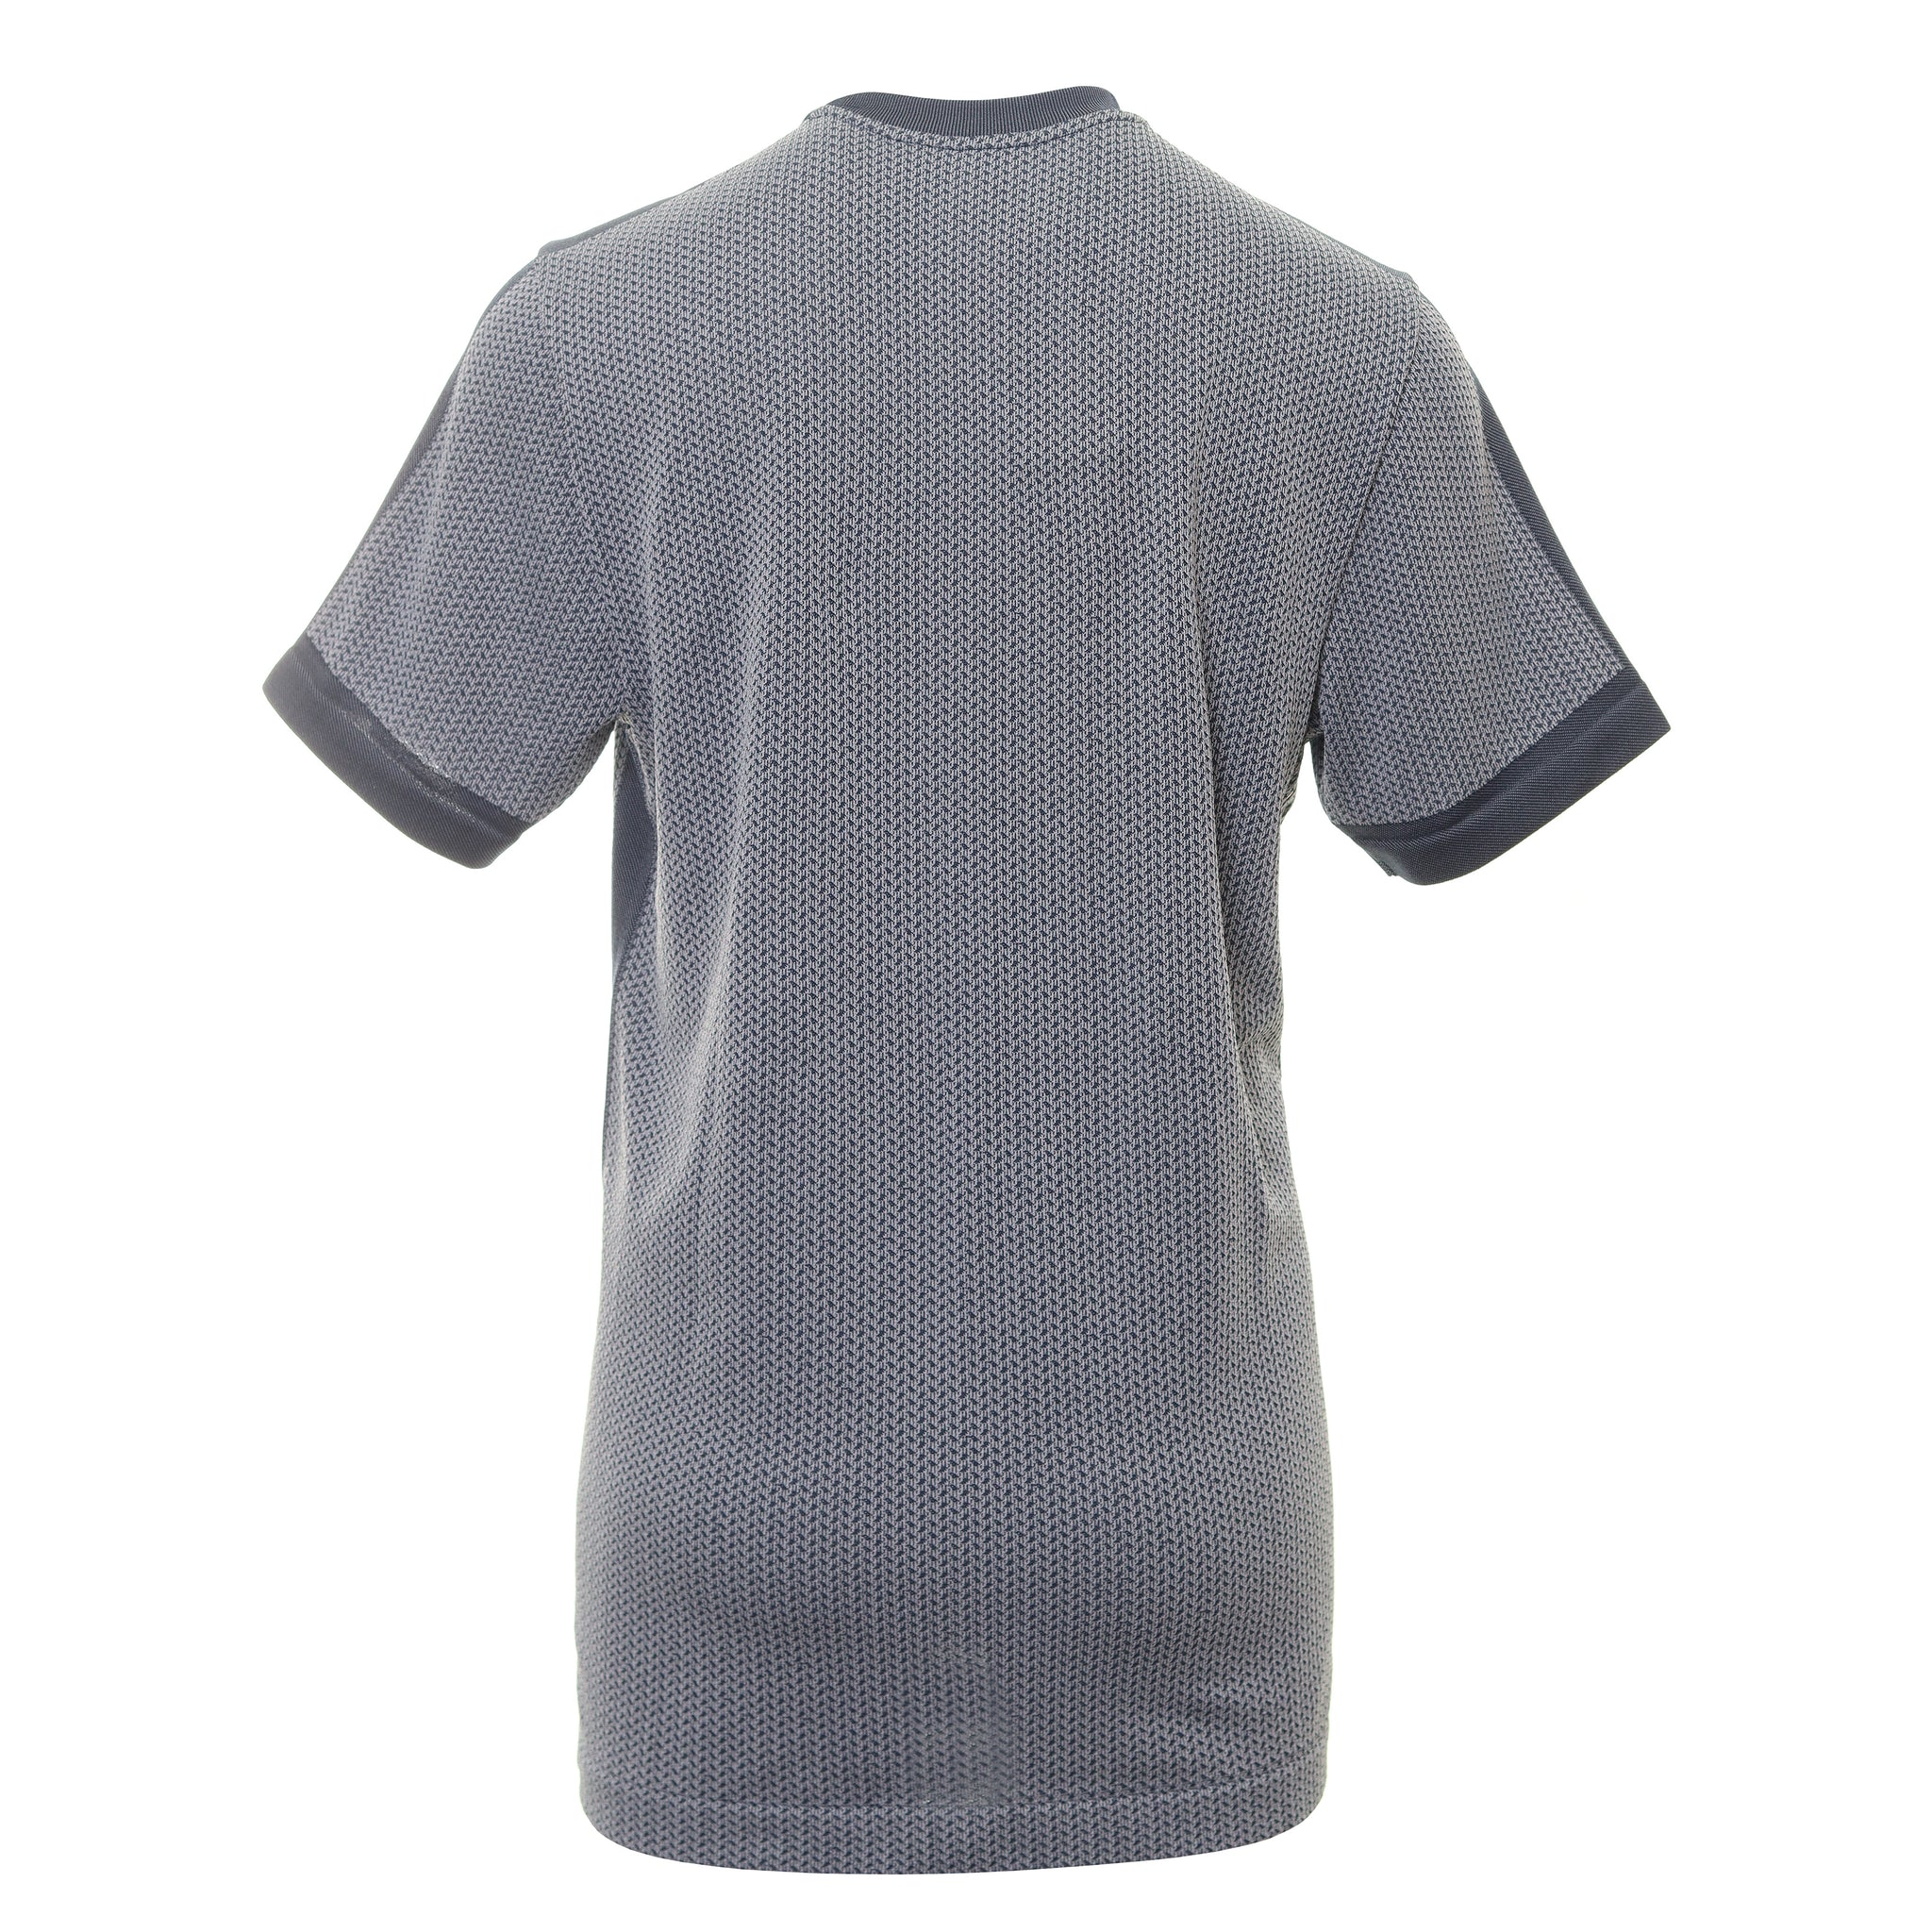 adidas Golf Textured Primeknit Shirt